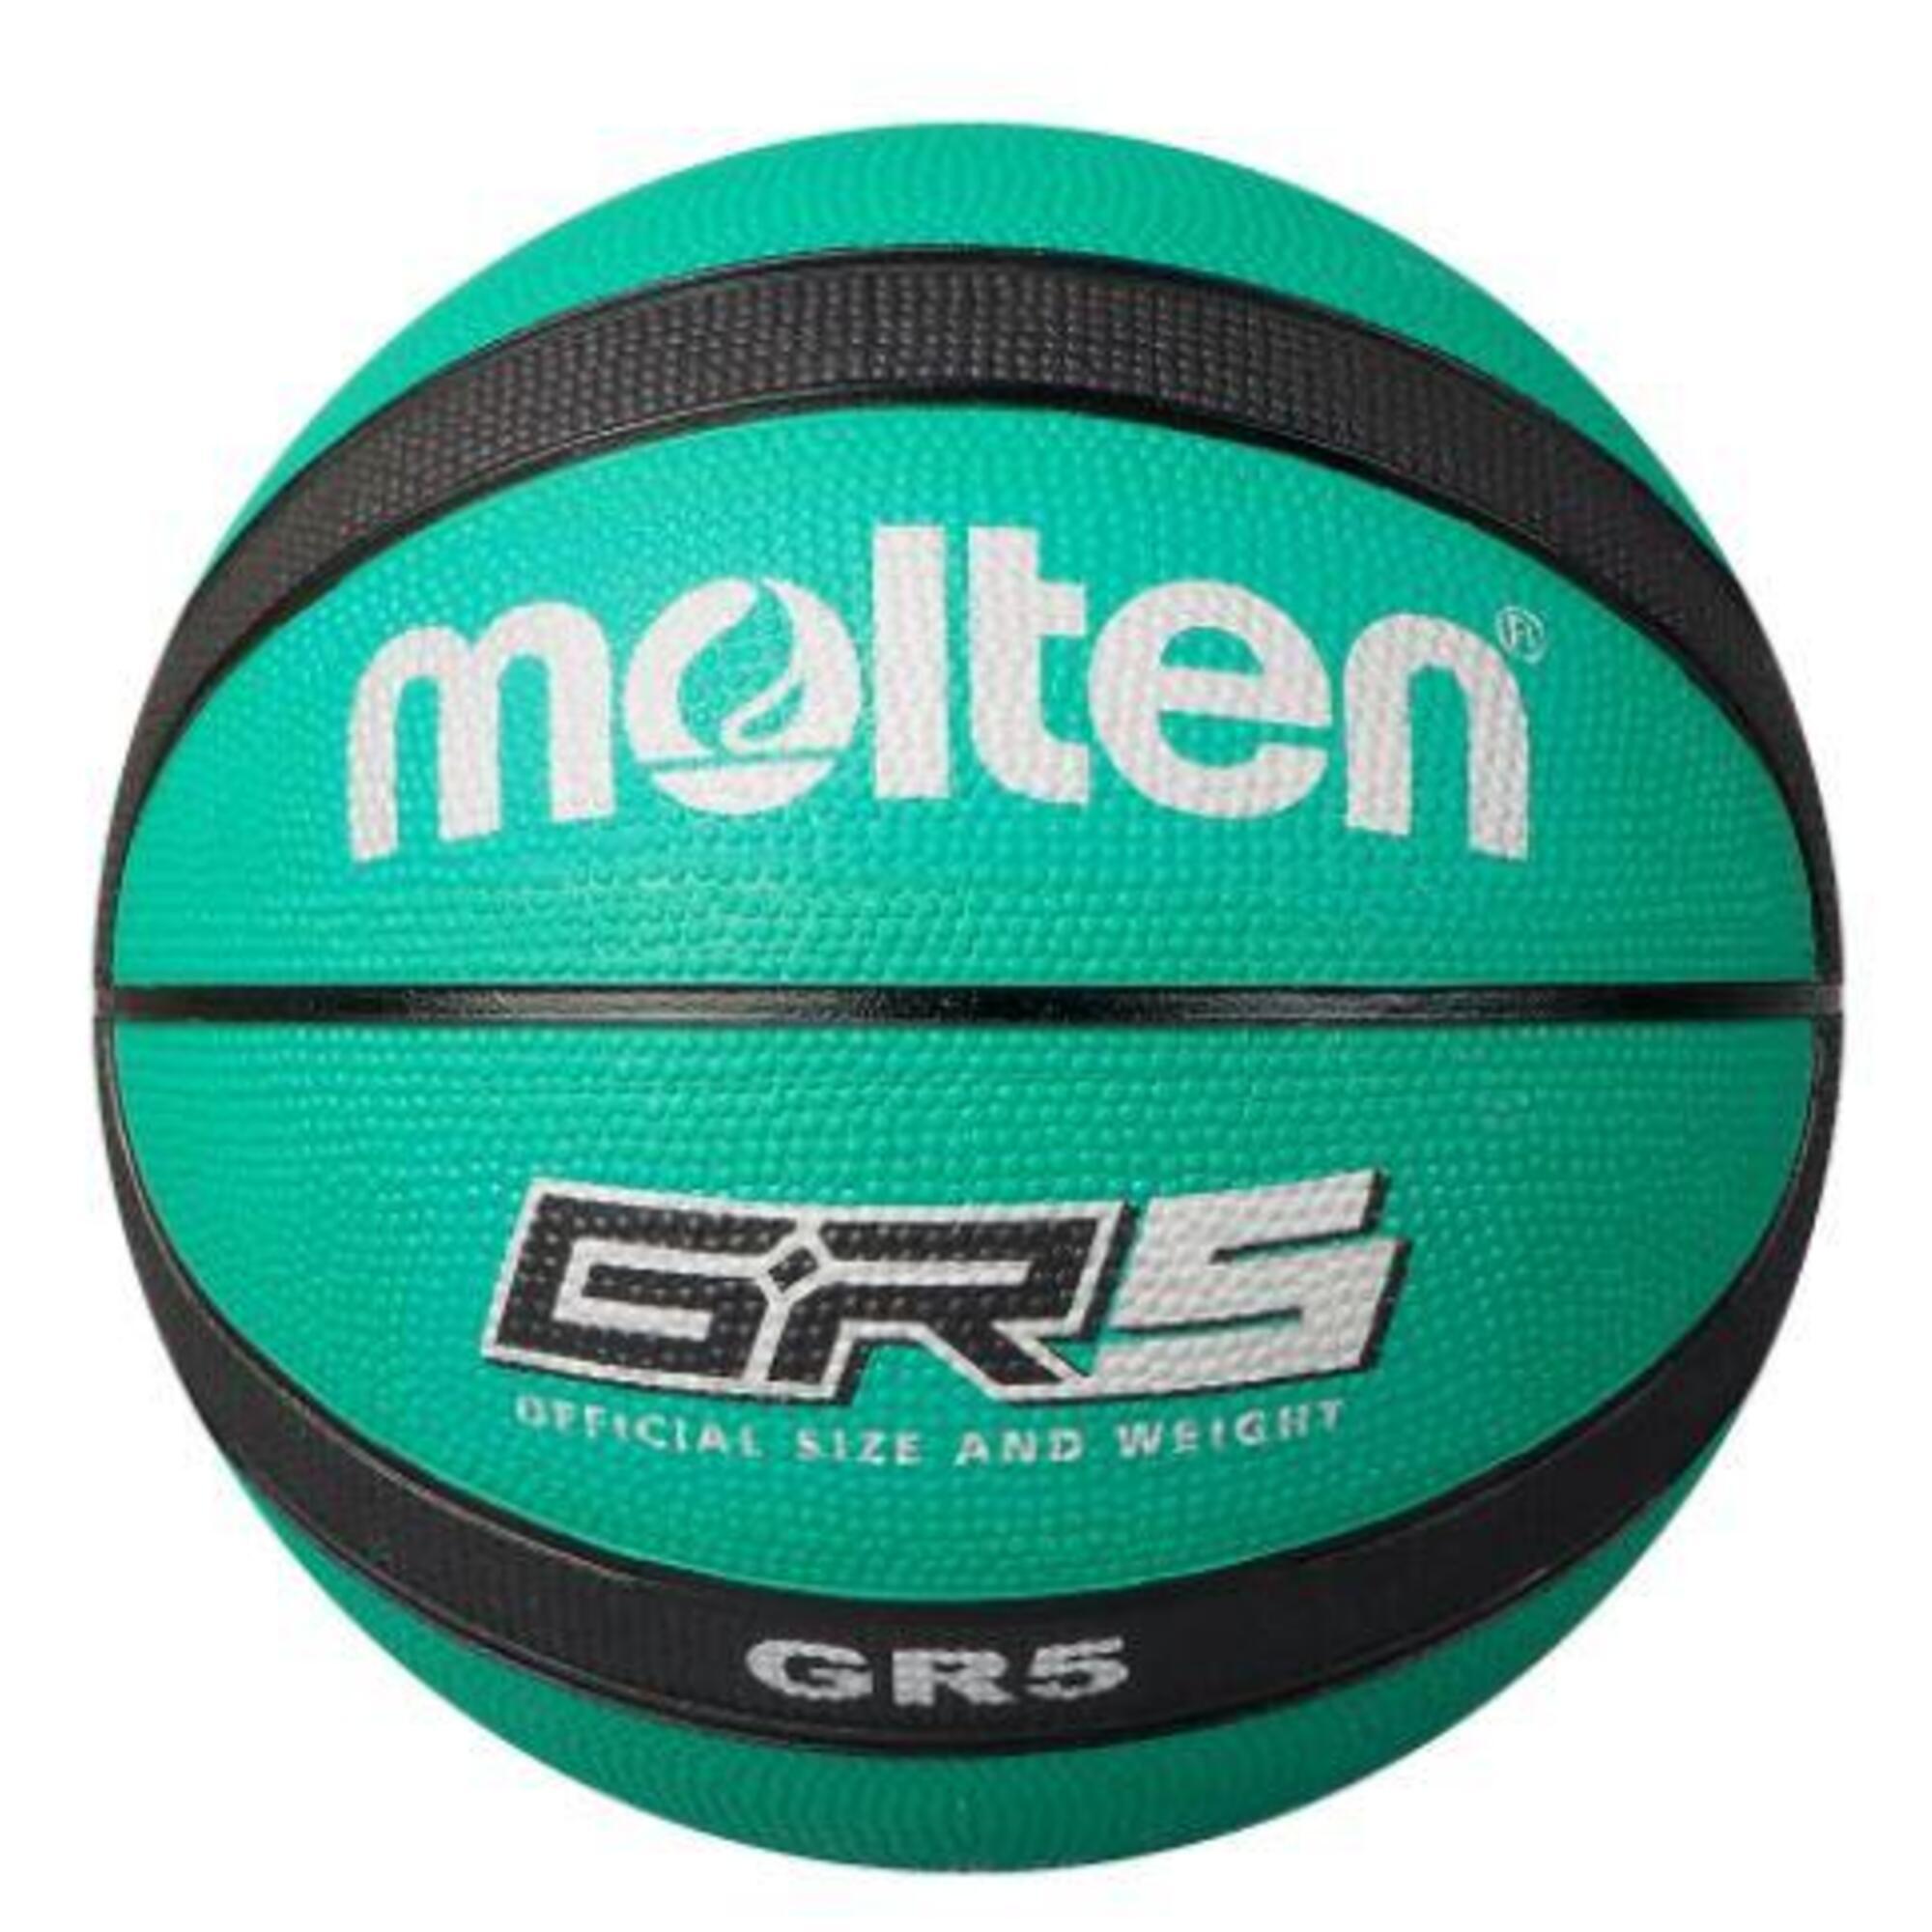 MOLTEN Molten BGR Rubber Basketball-SIZE 5